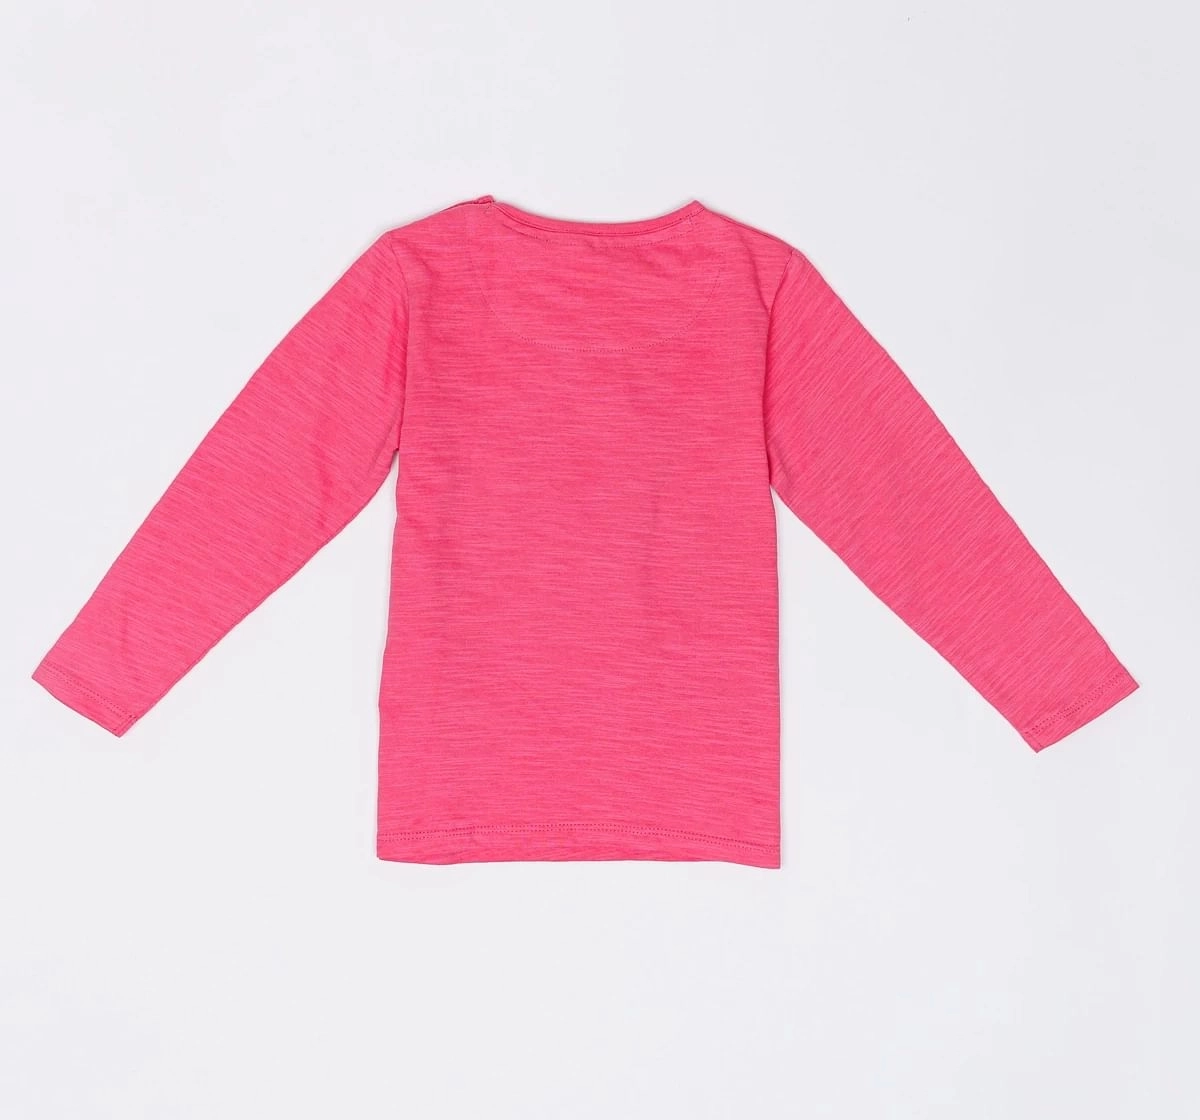 Pink Llama Long Sleeve Frill Shirt - 1 Left Size 2-4 years